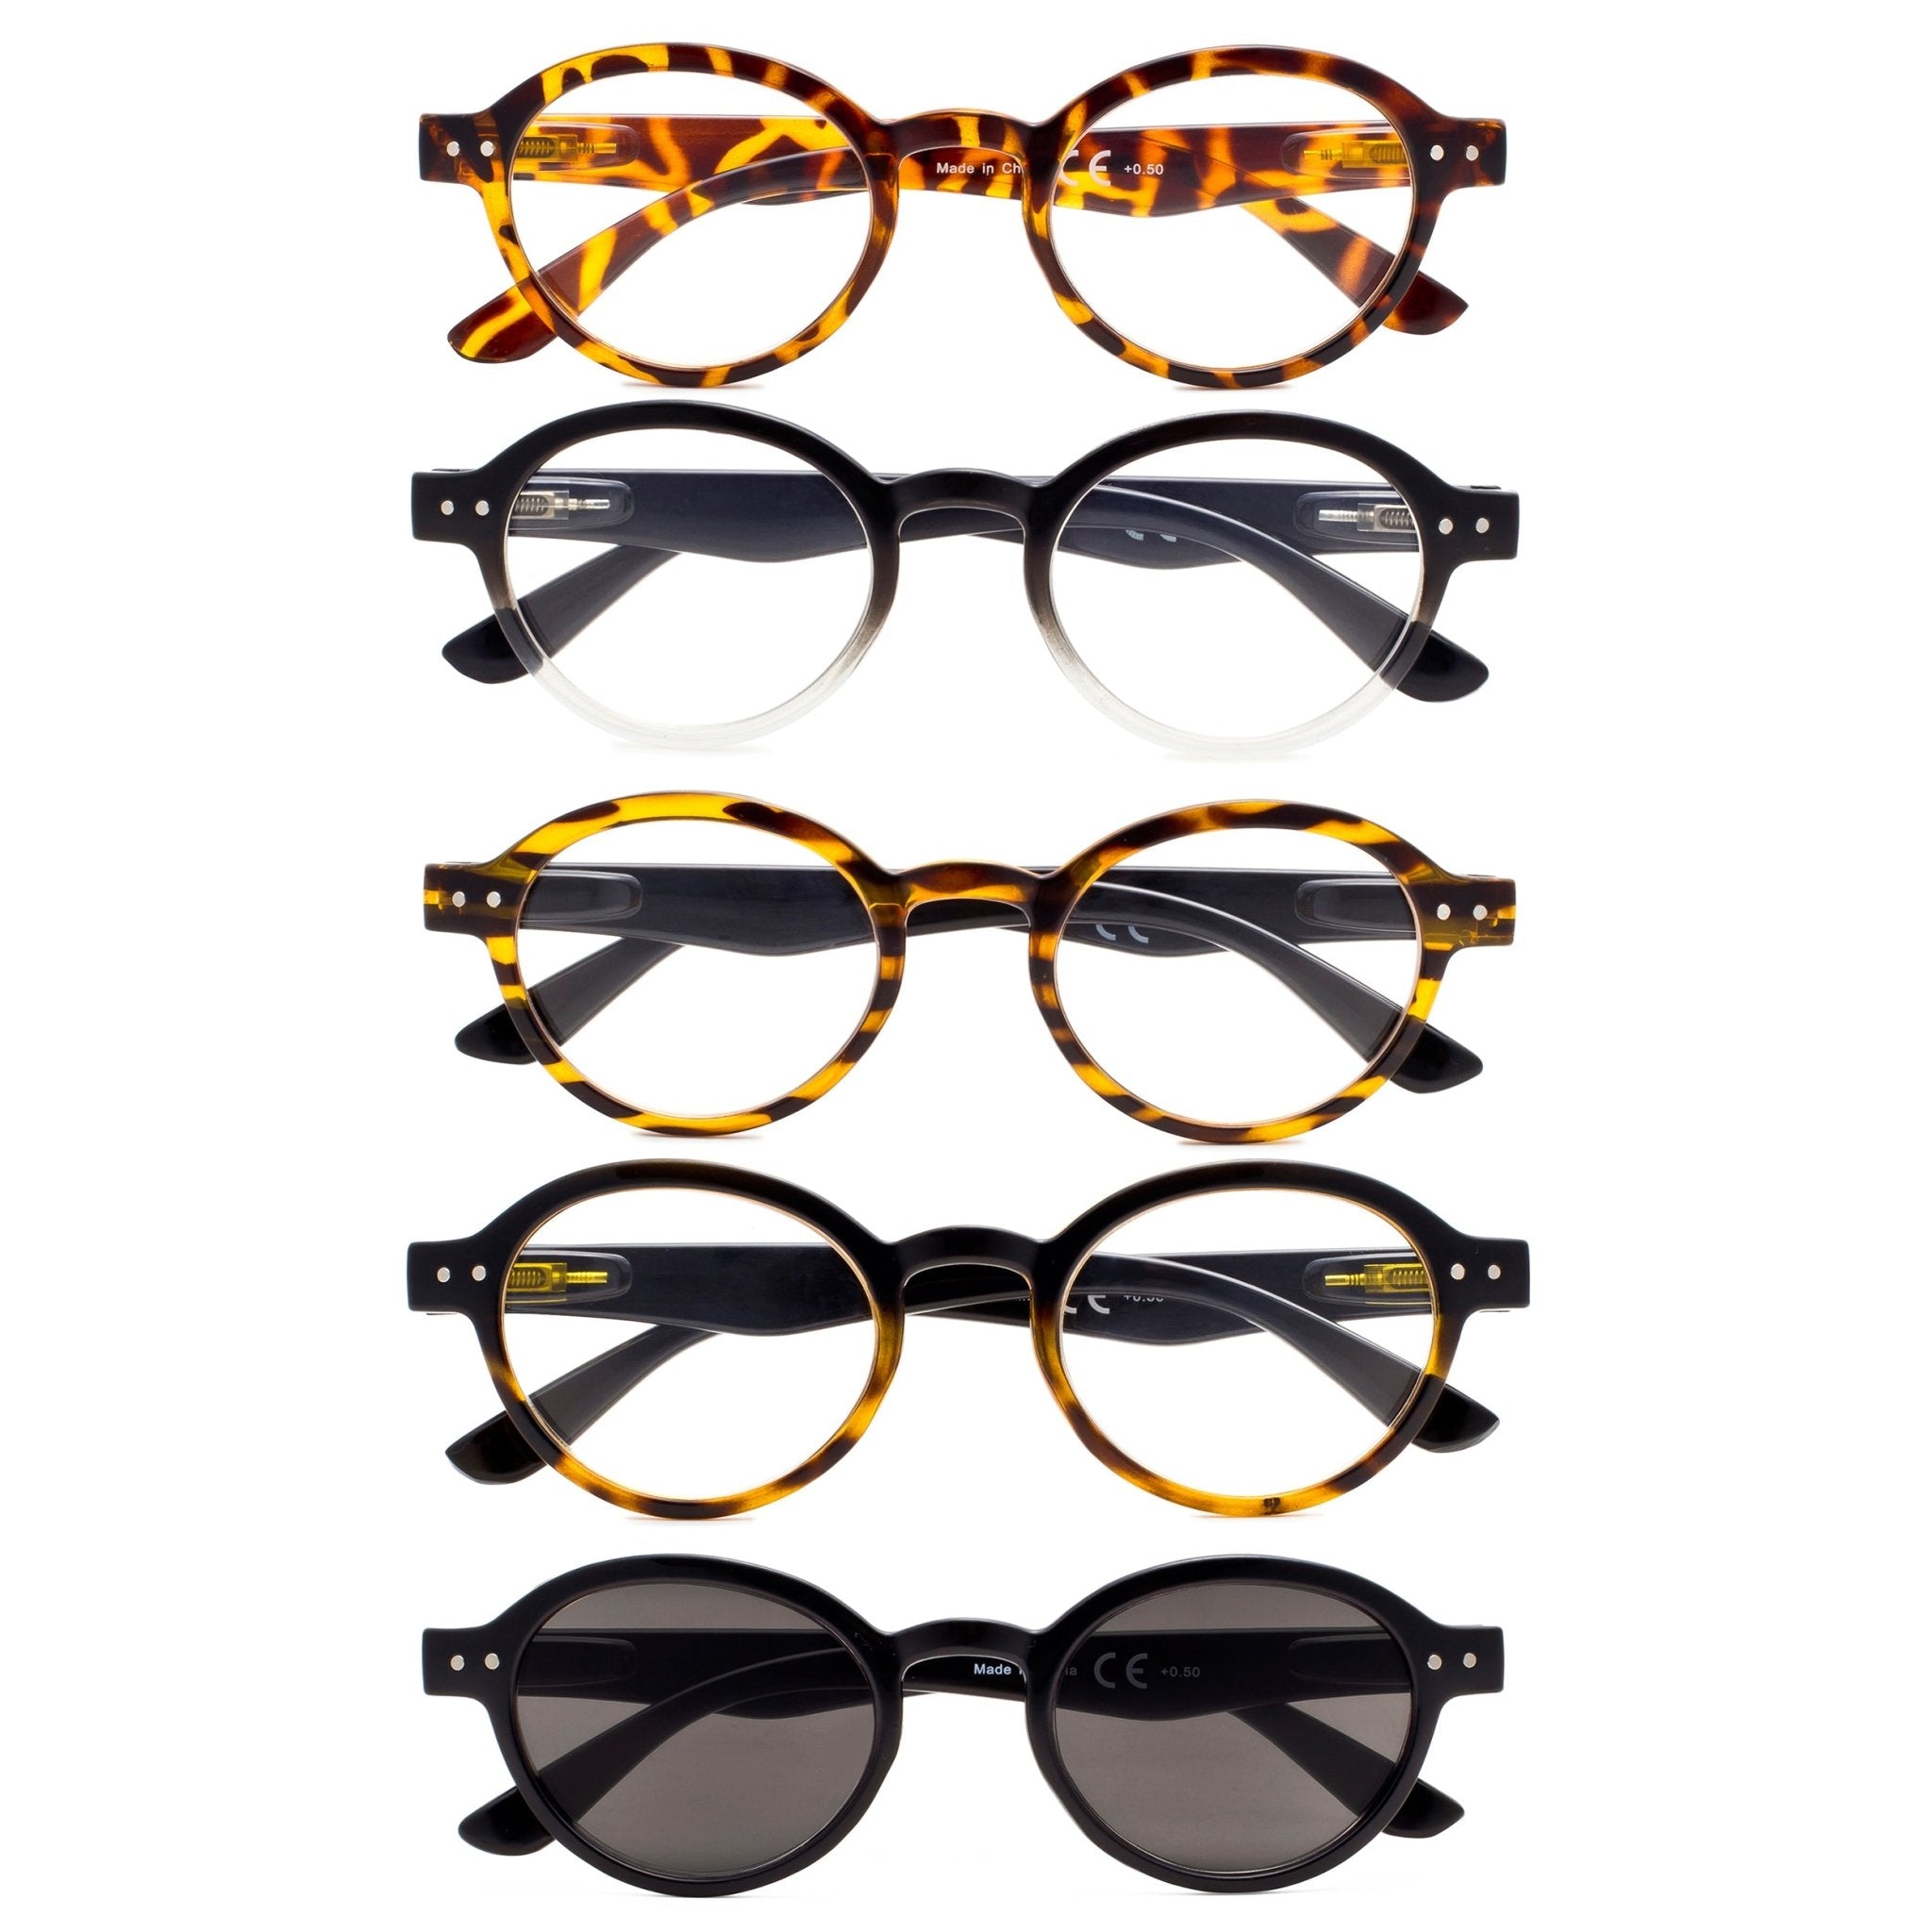 EyeGlow Vintage Men Round Sunglasses Retro Sunglasses for Women Polarized  Lens Acetate Material | Tortoise sunglasses women, Round sunglasses  vintage, Sunglasses